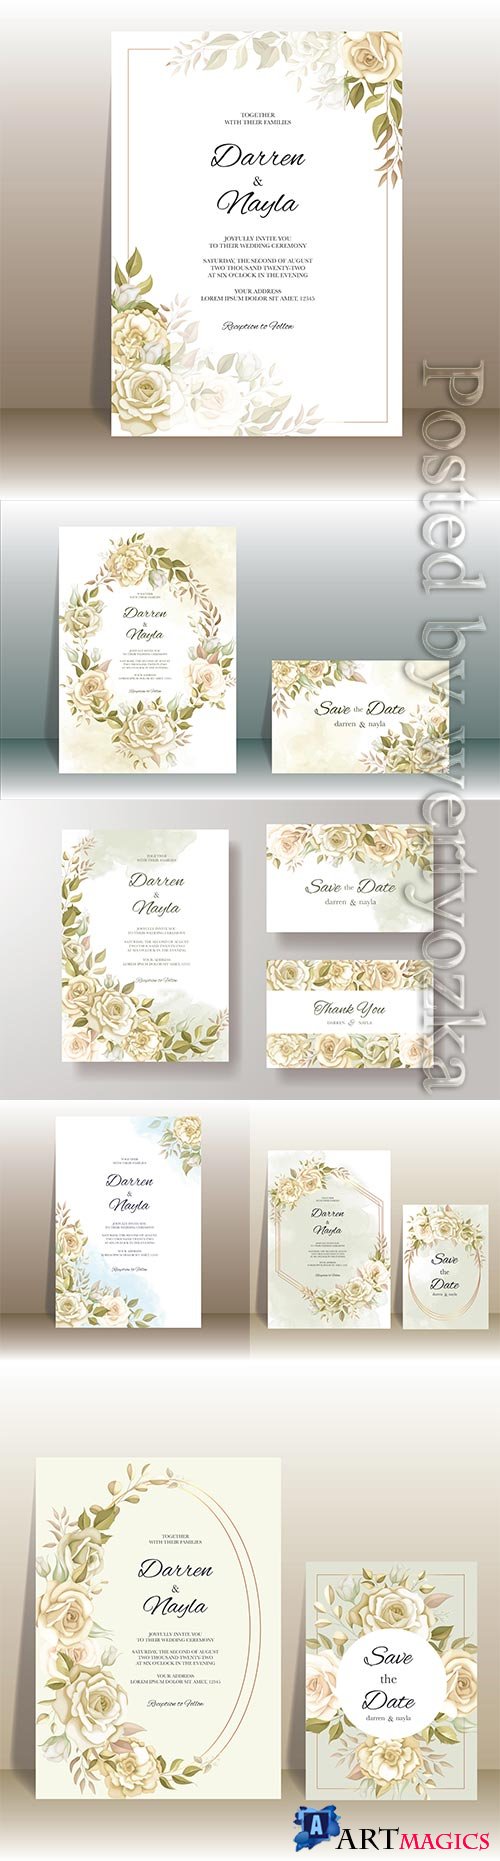 Elegant wedding invitation card with rose decoration